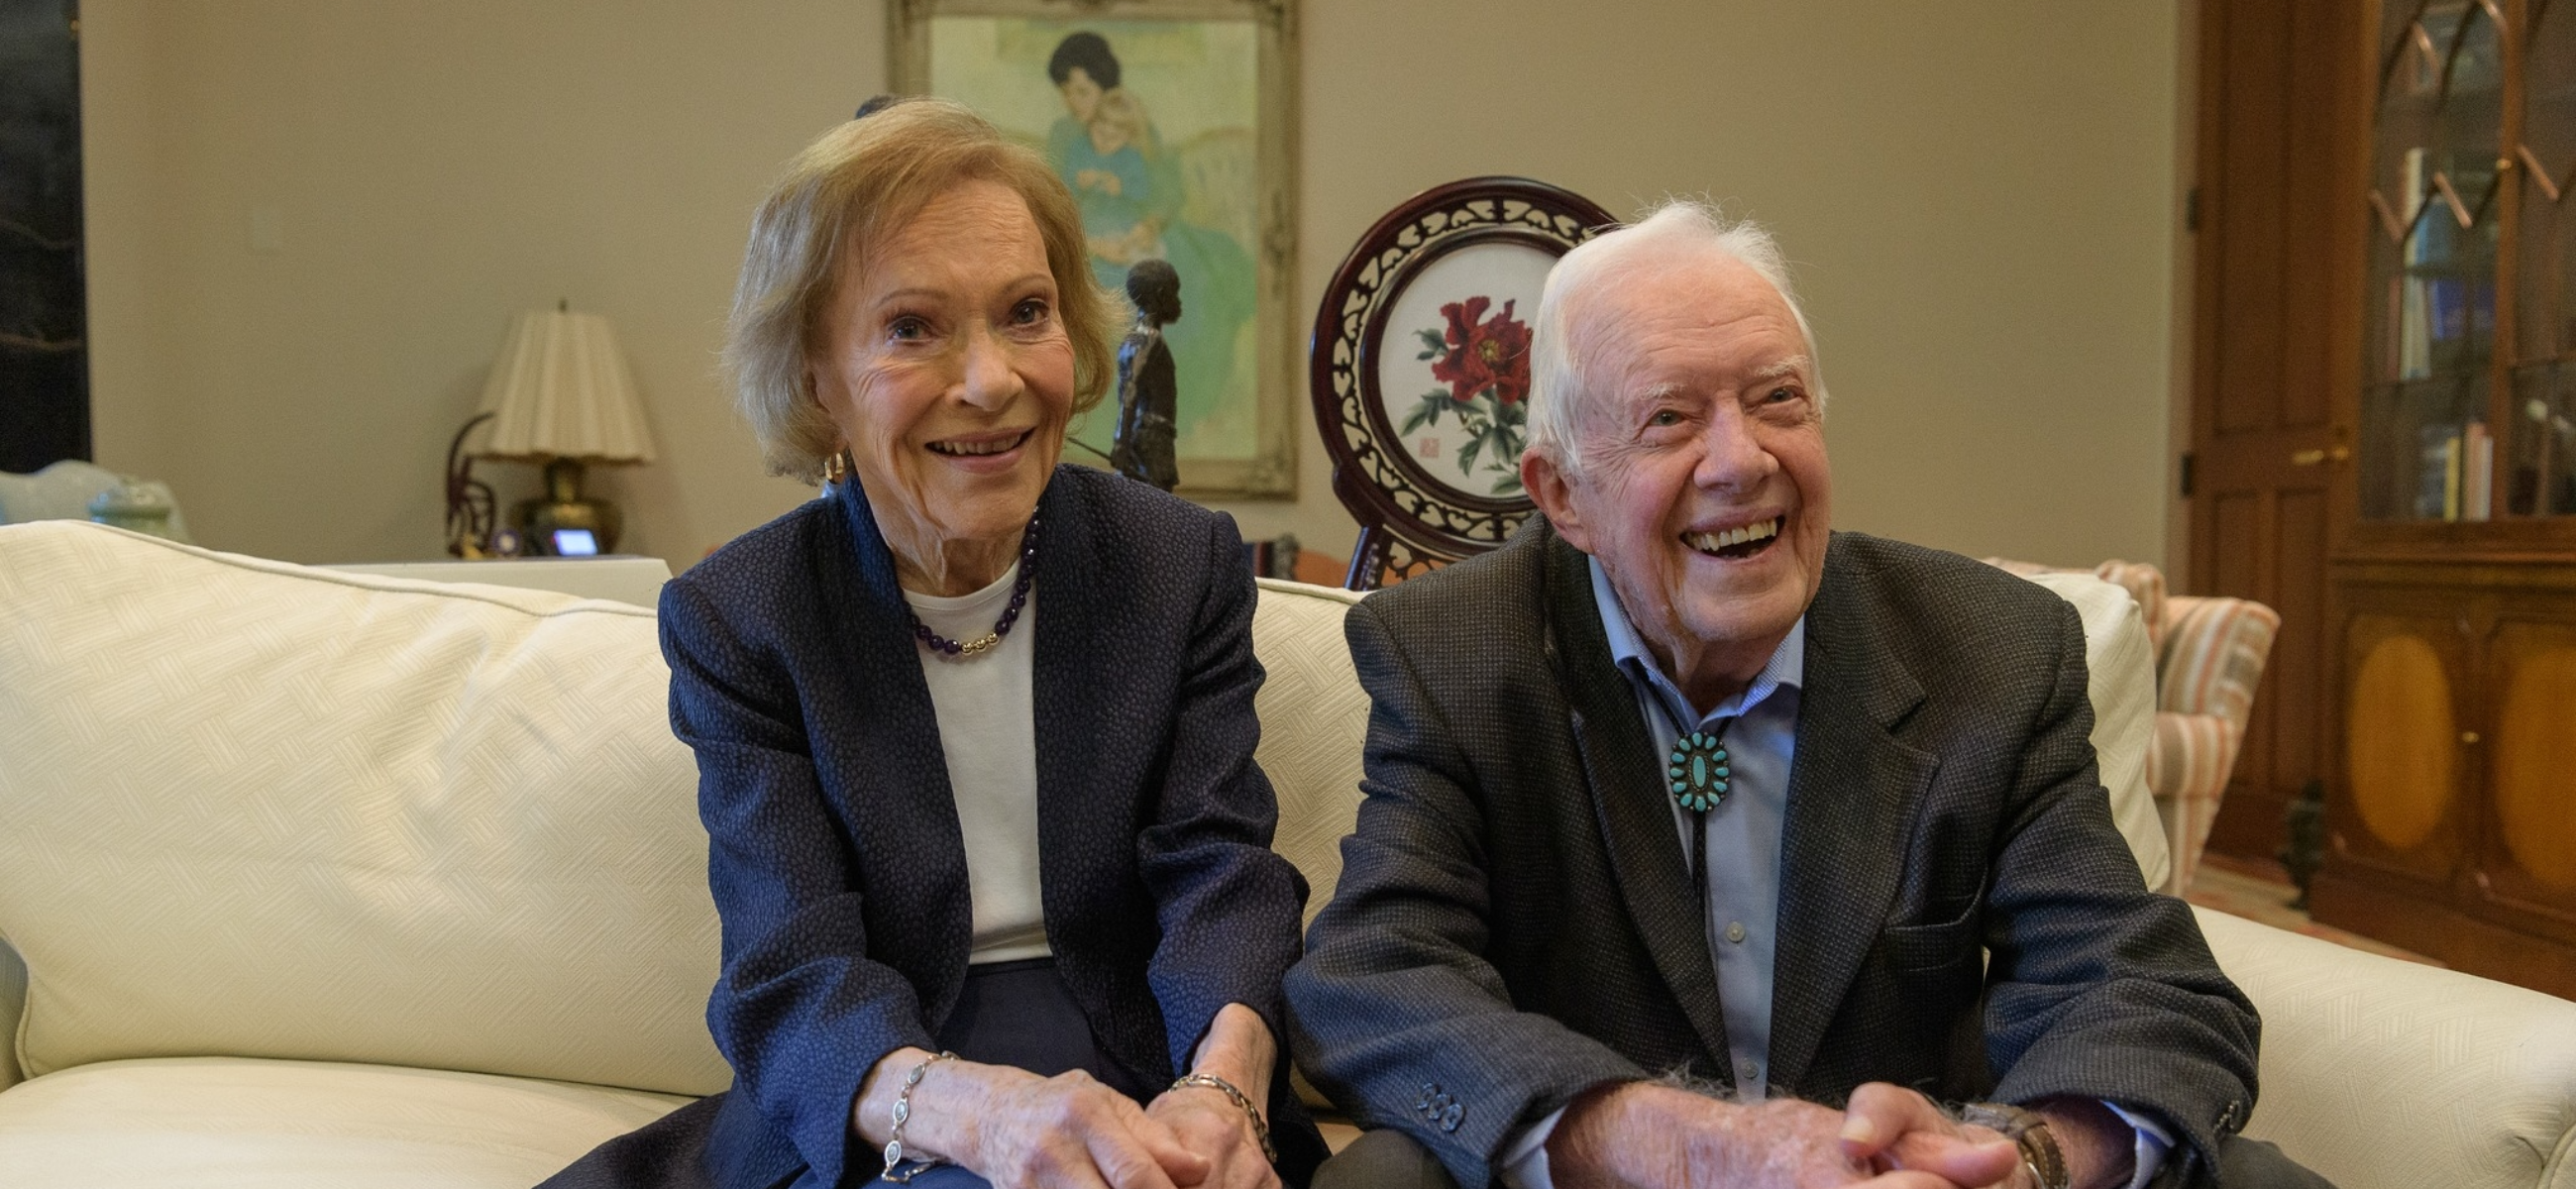 Rosalynn and Jimmy Carter. (Credit: The Carter Center)